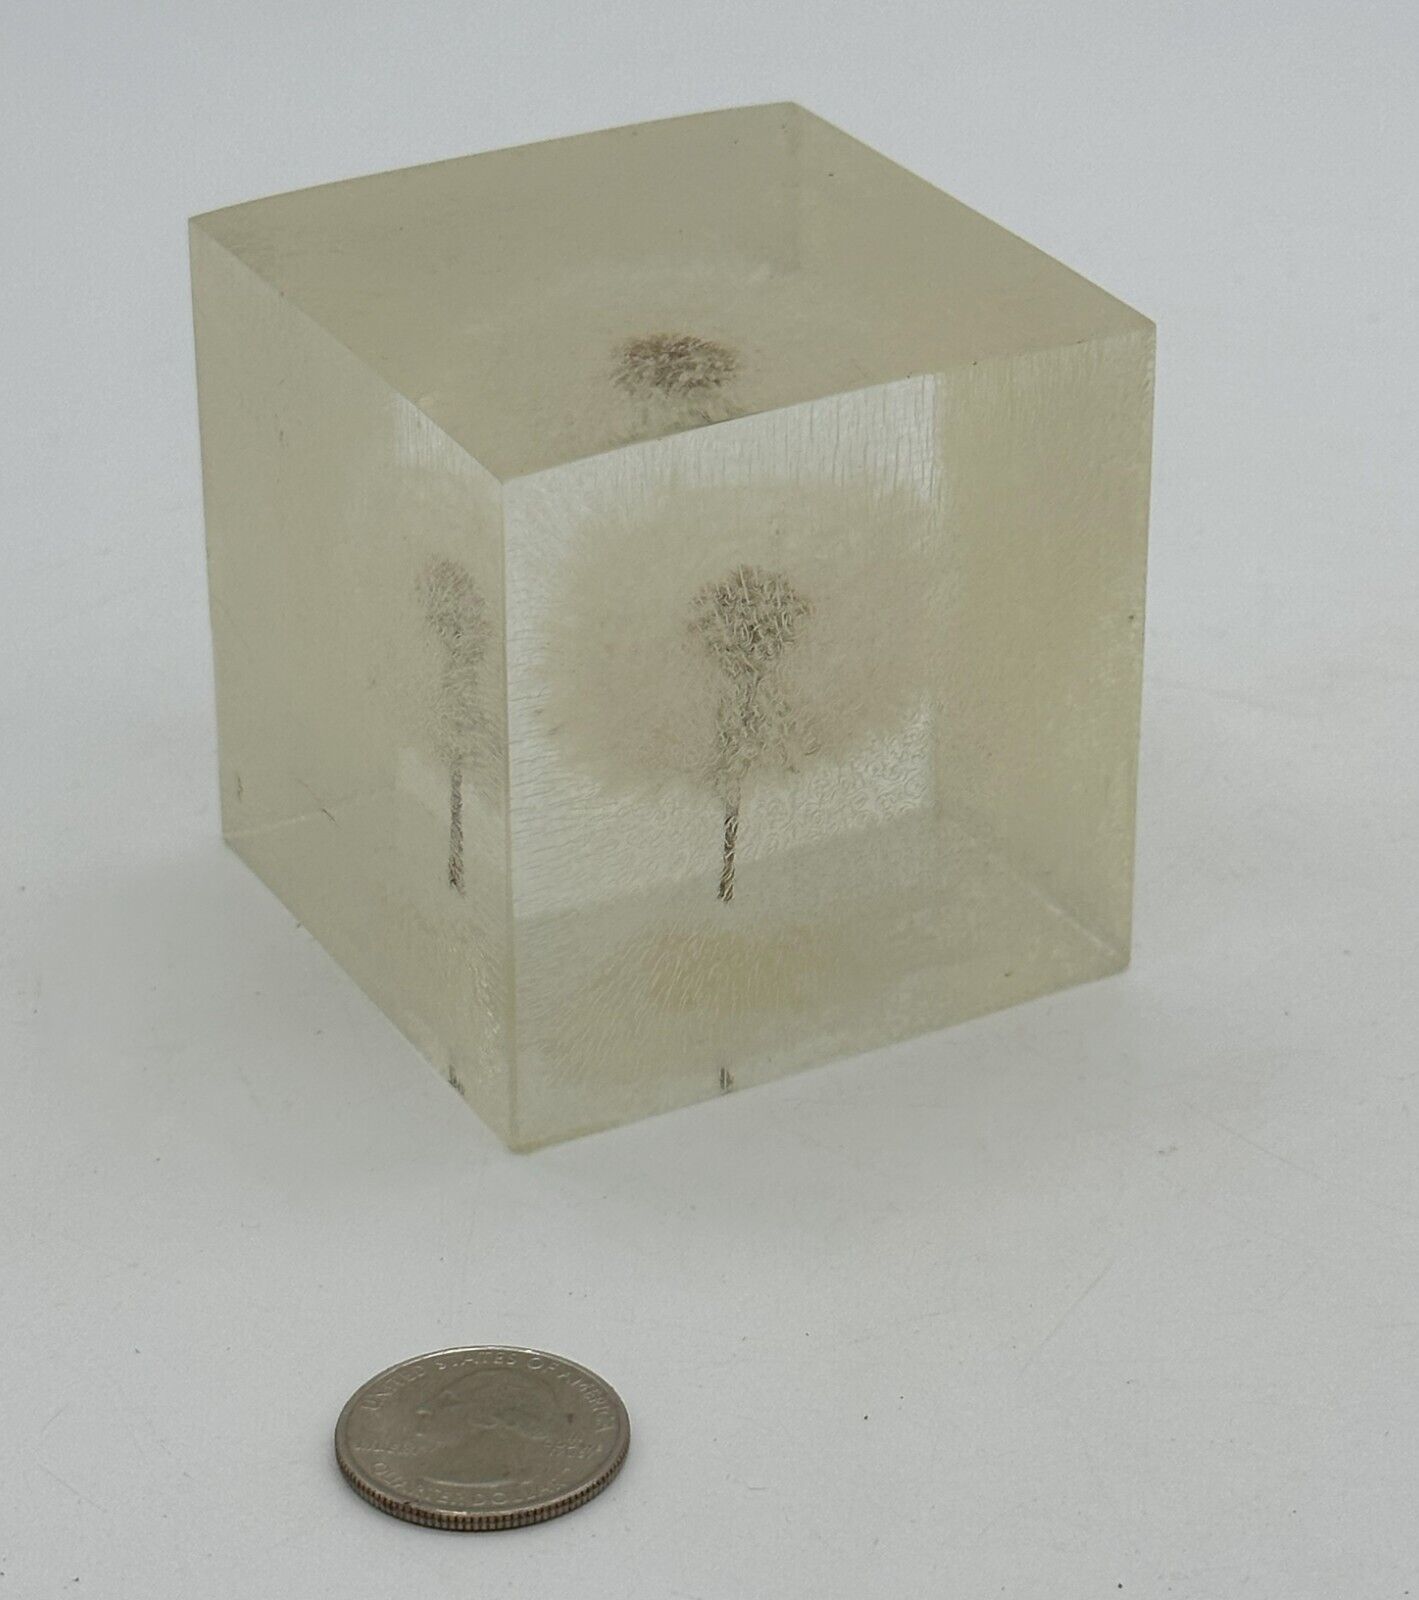 Dandelion Seed Head Blowball Epoxy Resin Cube Desk Decor Paper Weight Art 2.5in